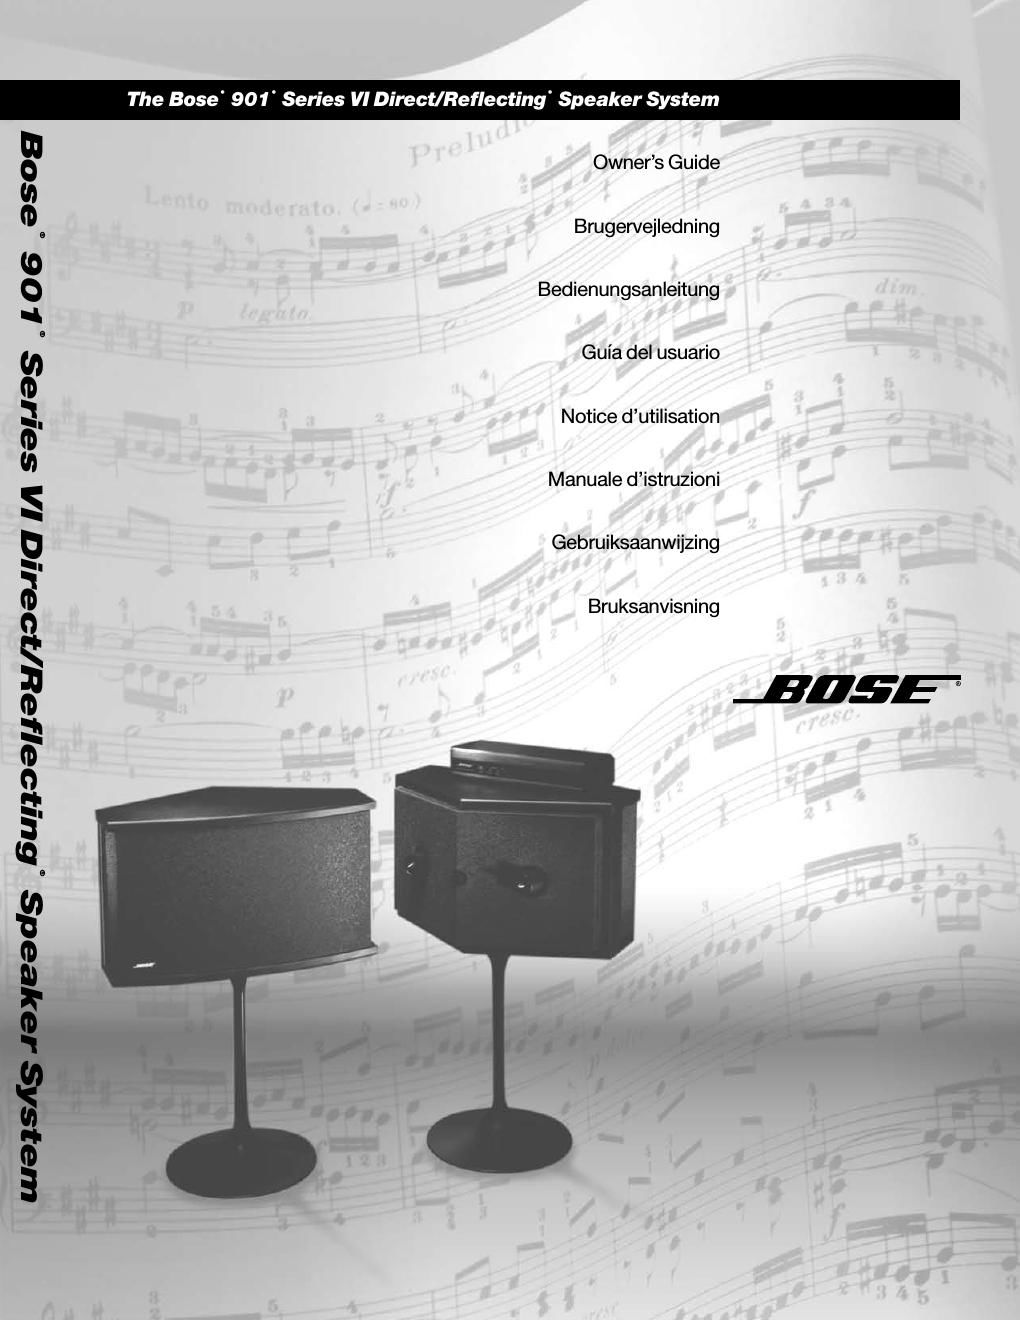 Bose 901 Series vi. Bose 901 service manual. 901 Direct/reflecting. Bose инструкция